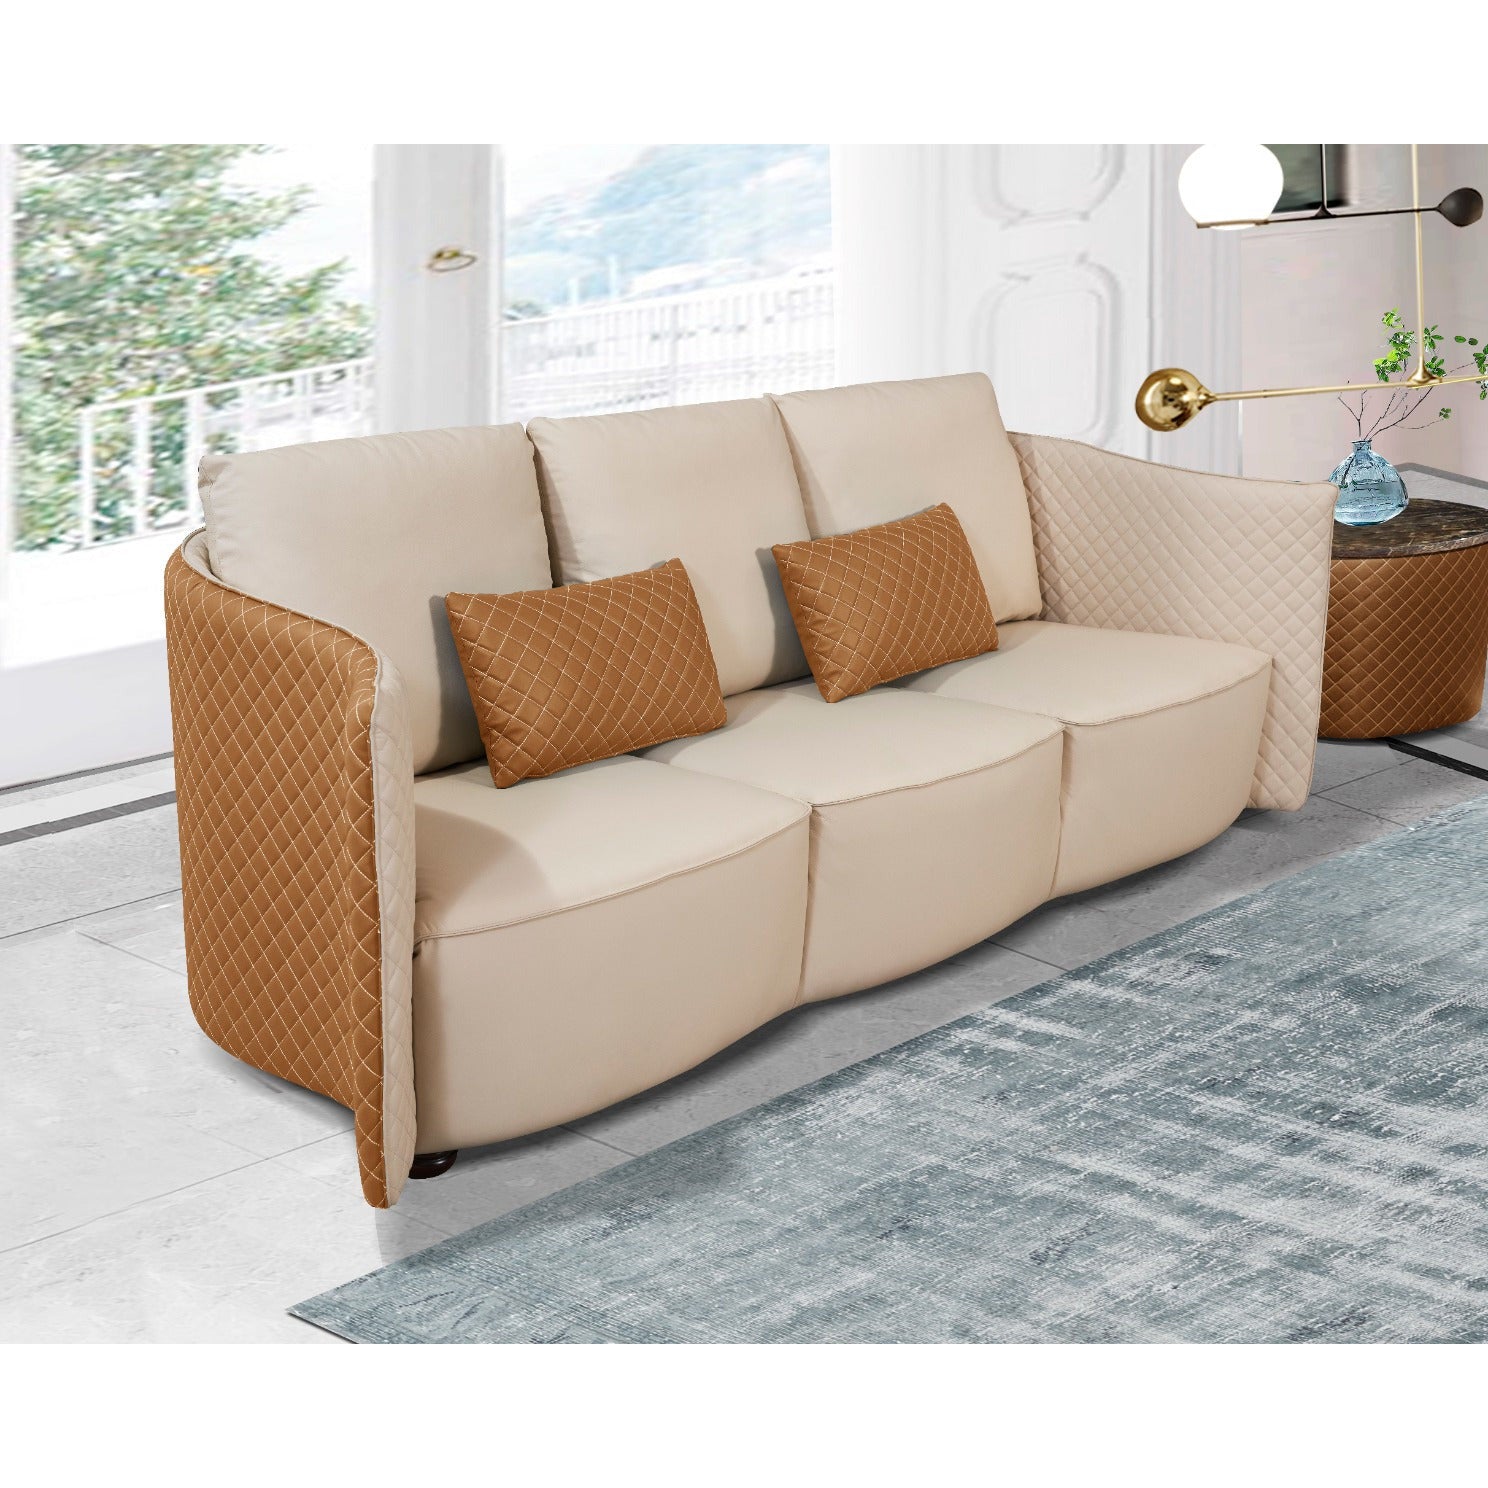 European Furniture - Makassar Sofa in Sand Beige & Orange - 52552-S - New Star Living